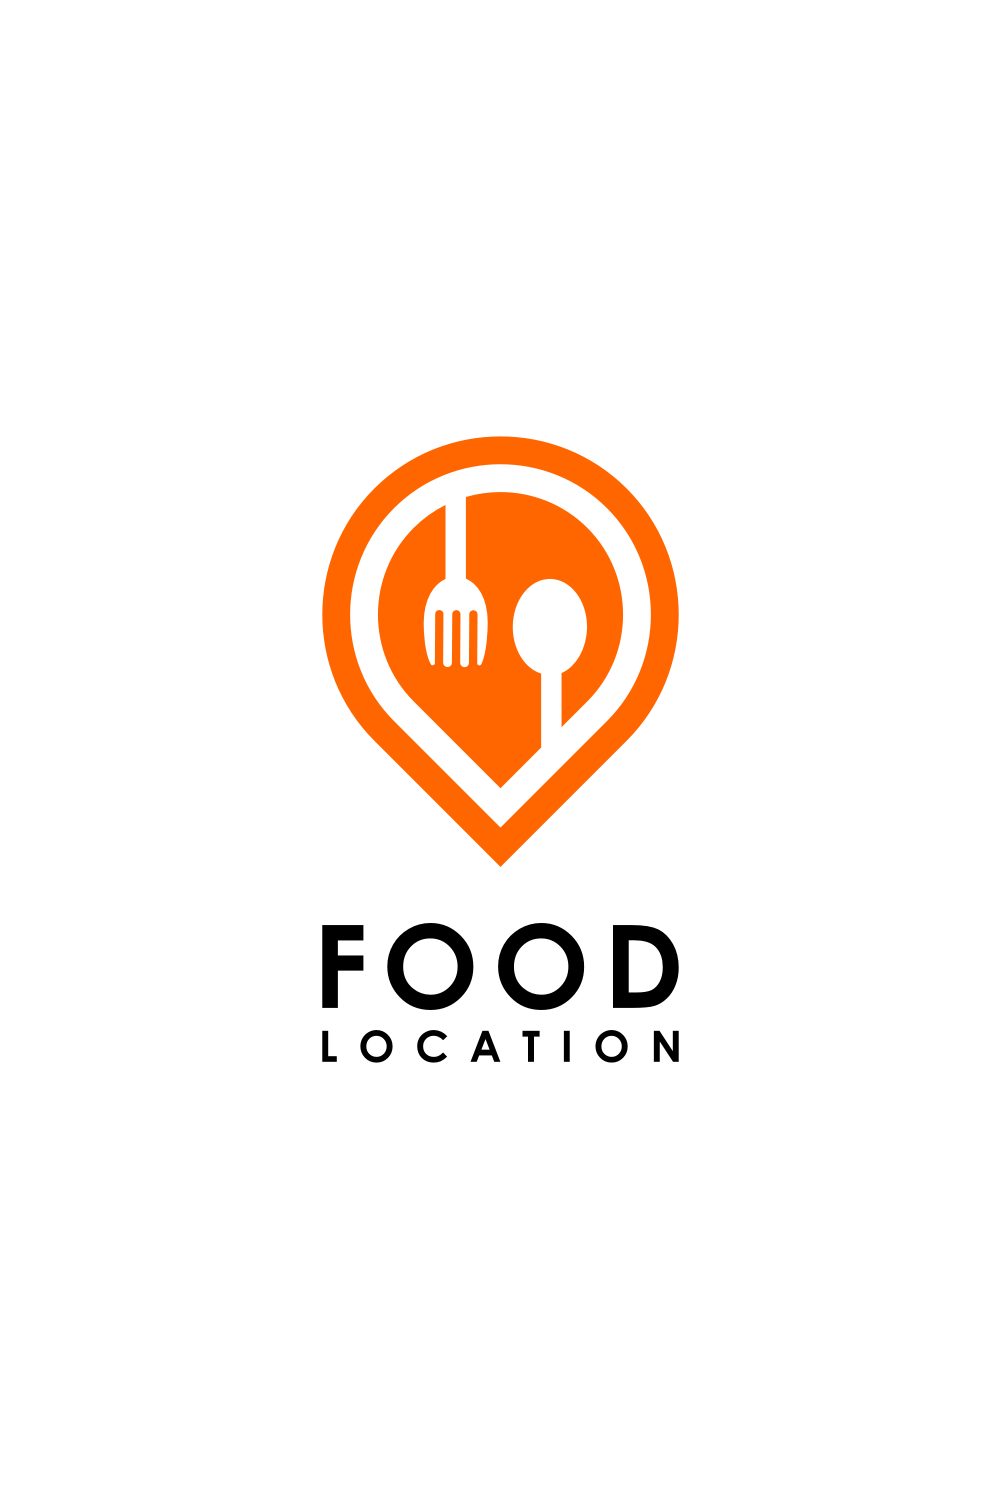 Food Pin Location Logo Vector Premium pinterest image.